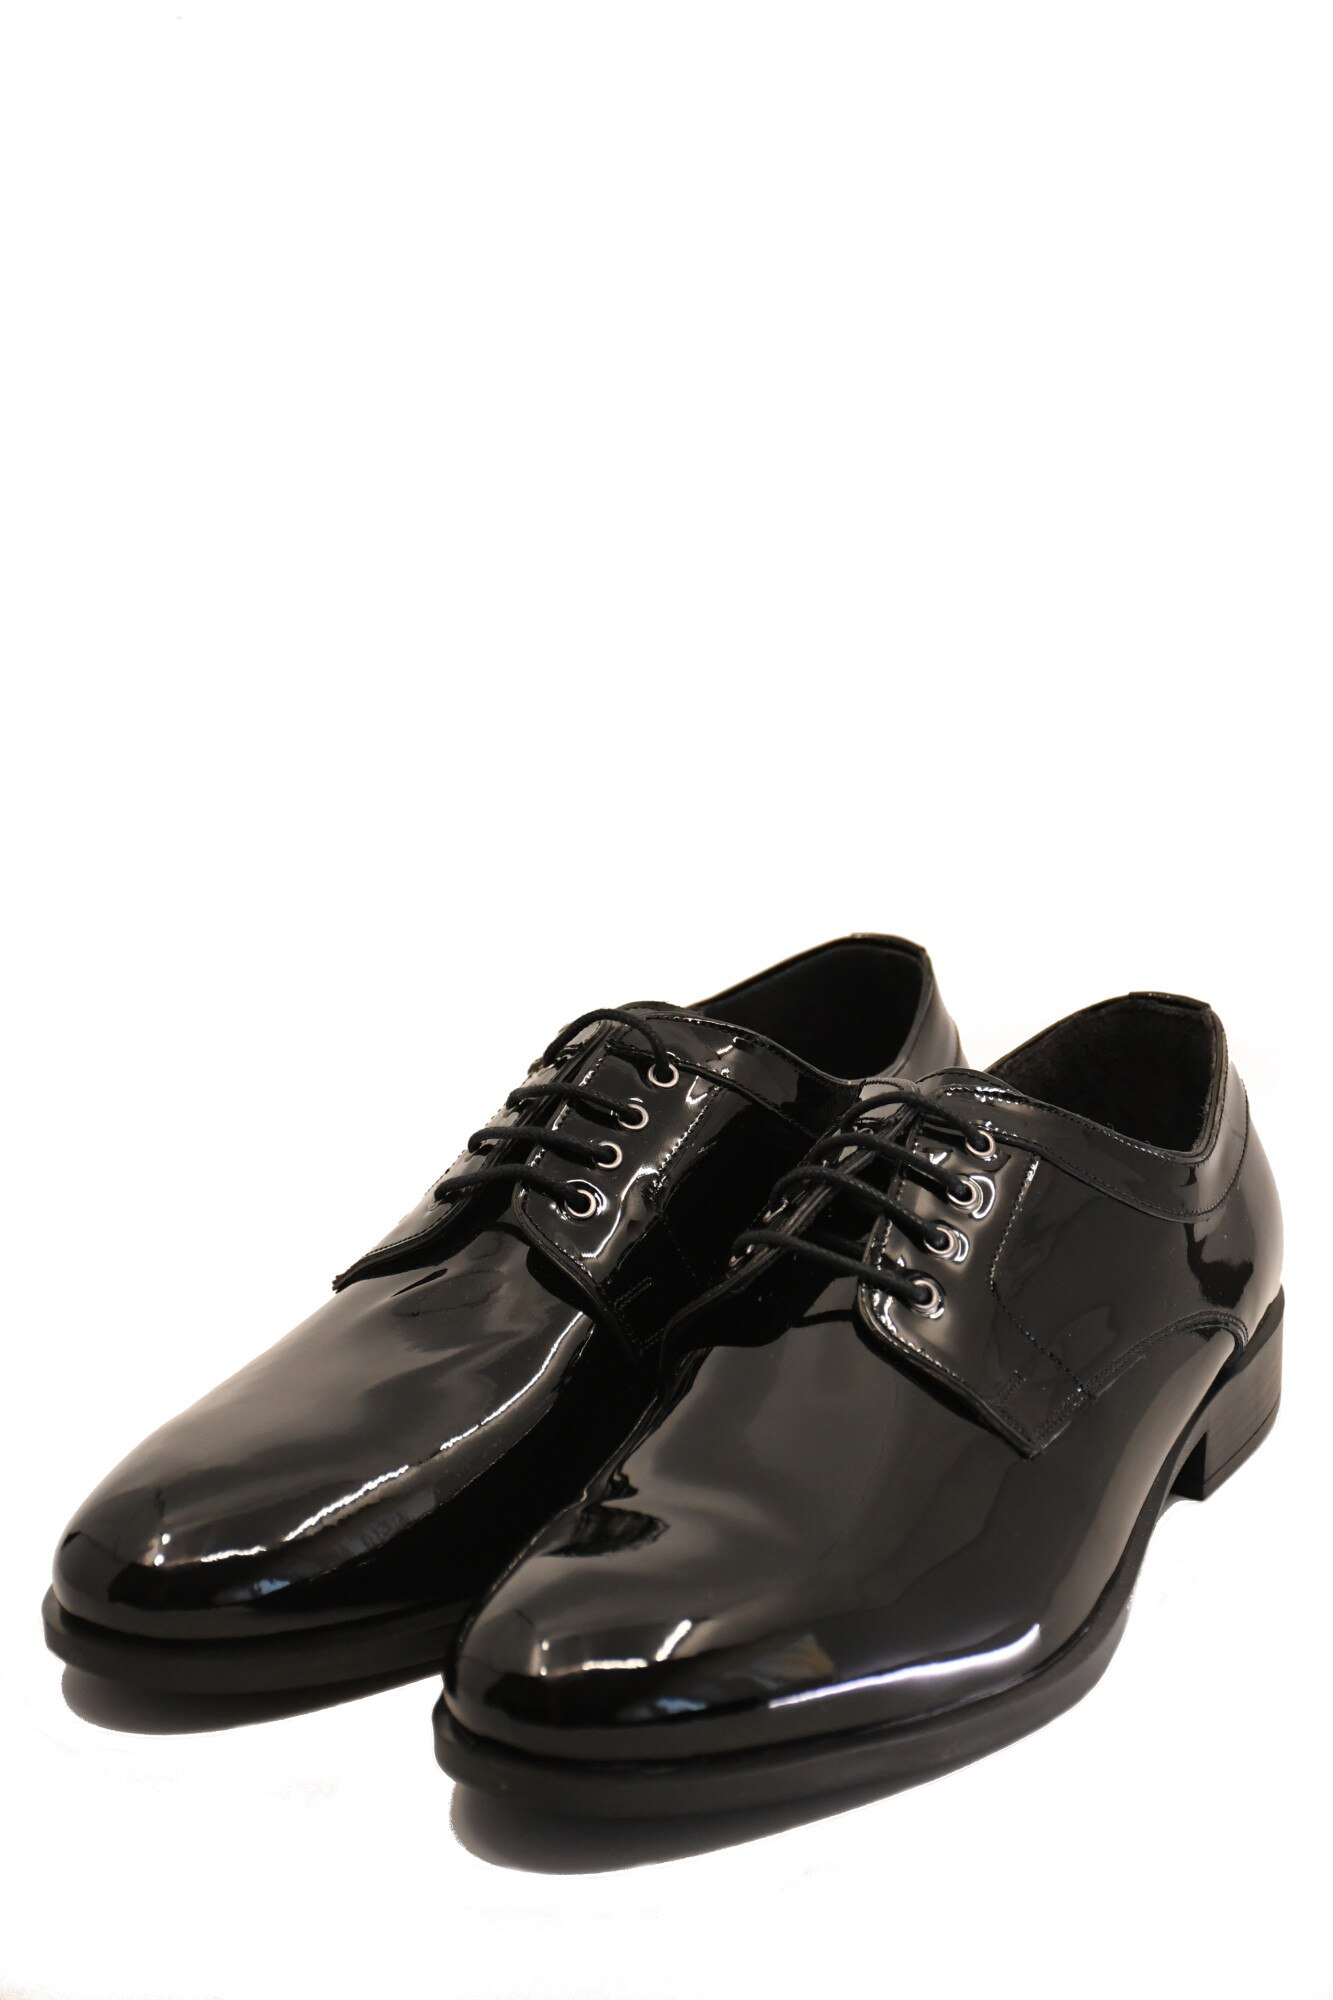 Generalize input Pebble Pantofi negri eleganti din lac pentru barbati -40 EU - eMAG.ro